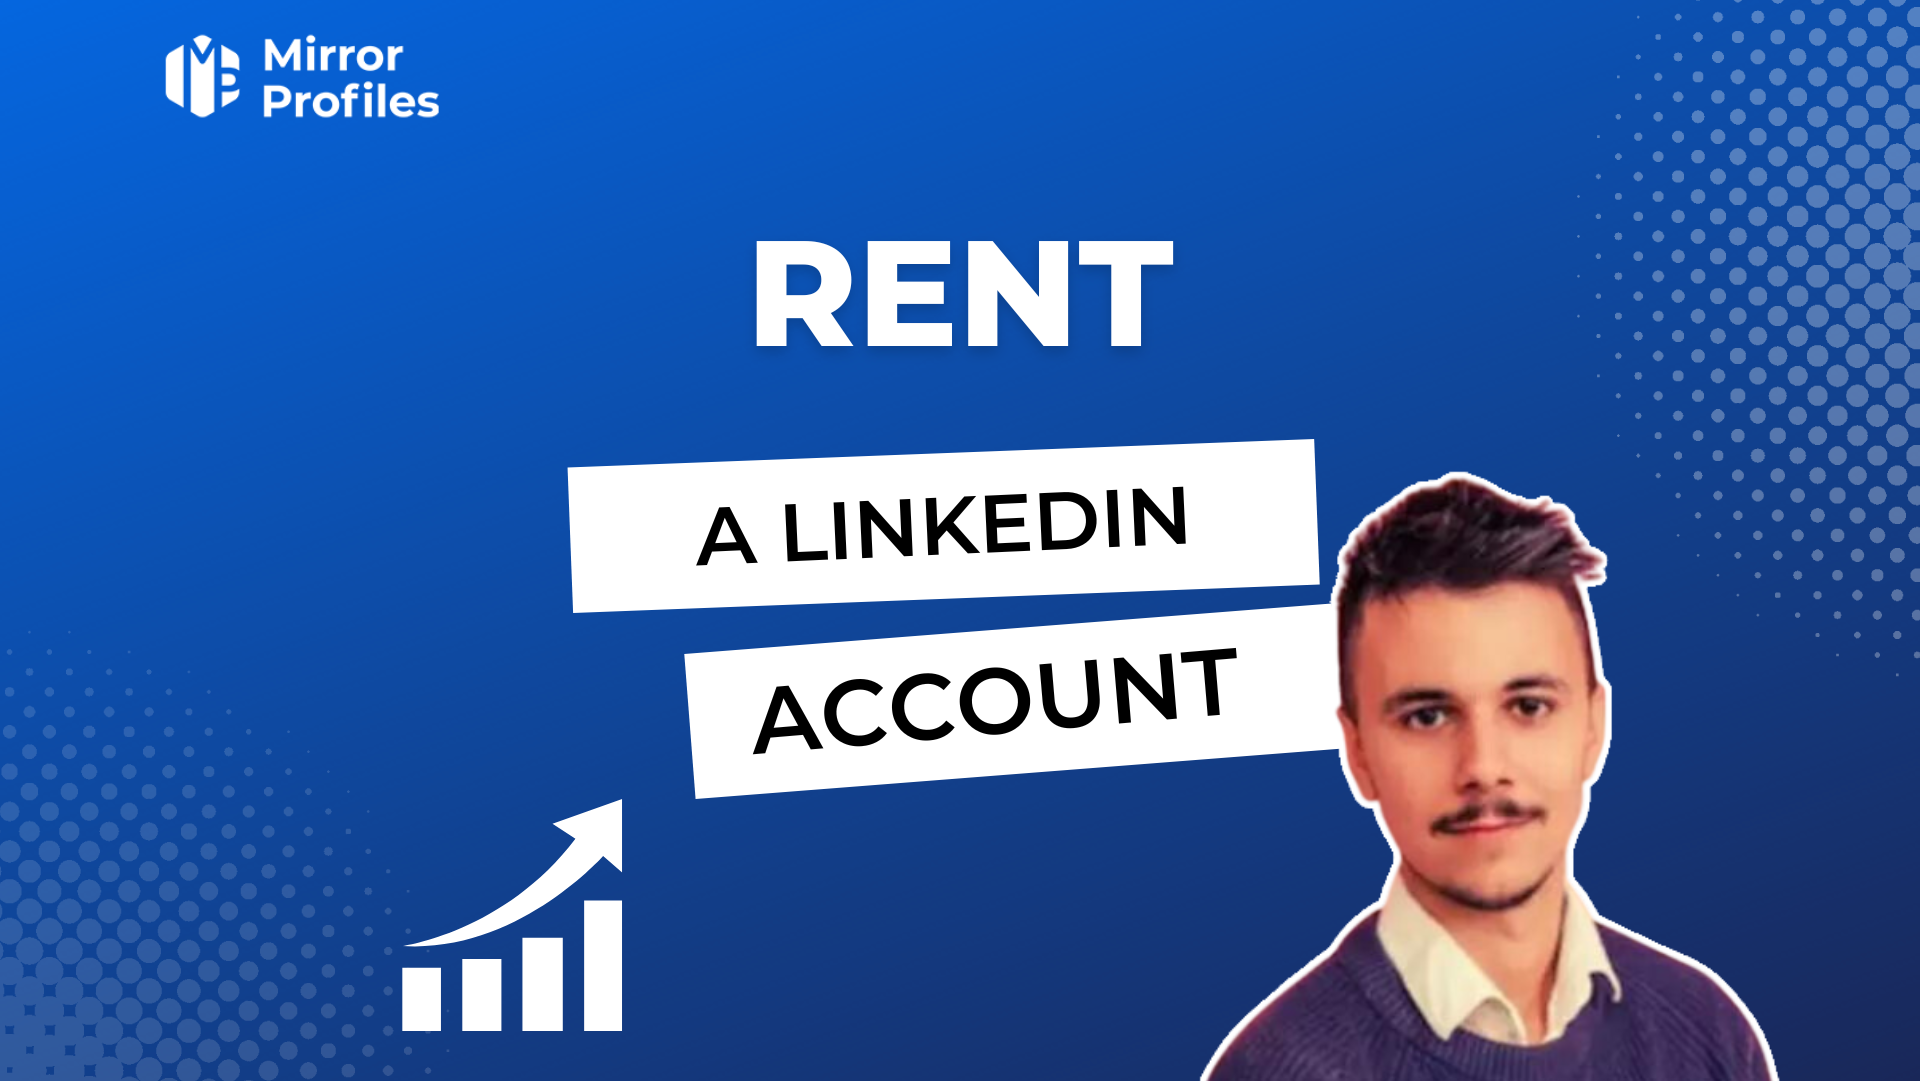 linkedin account renting